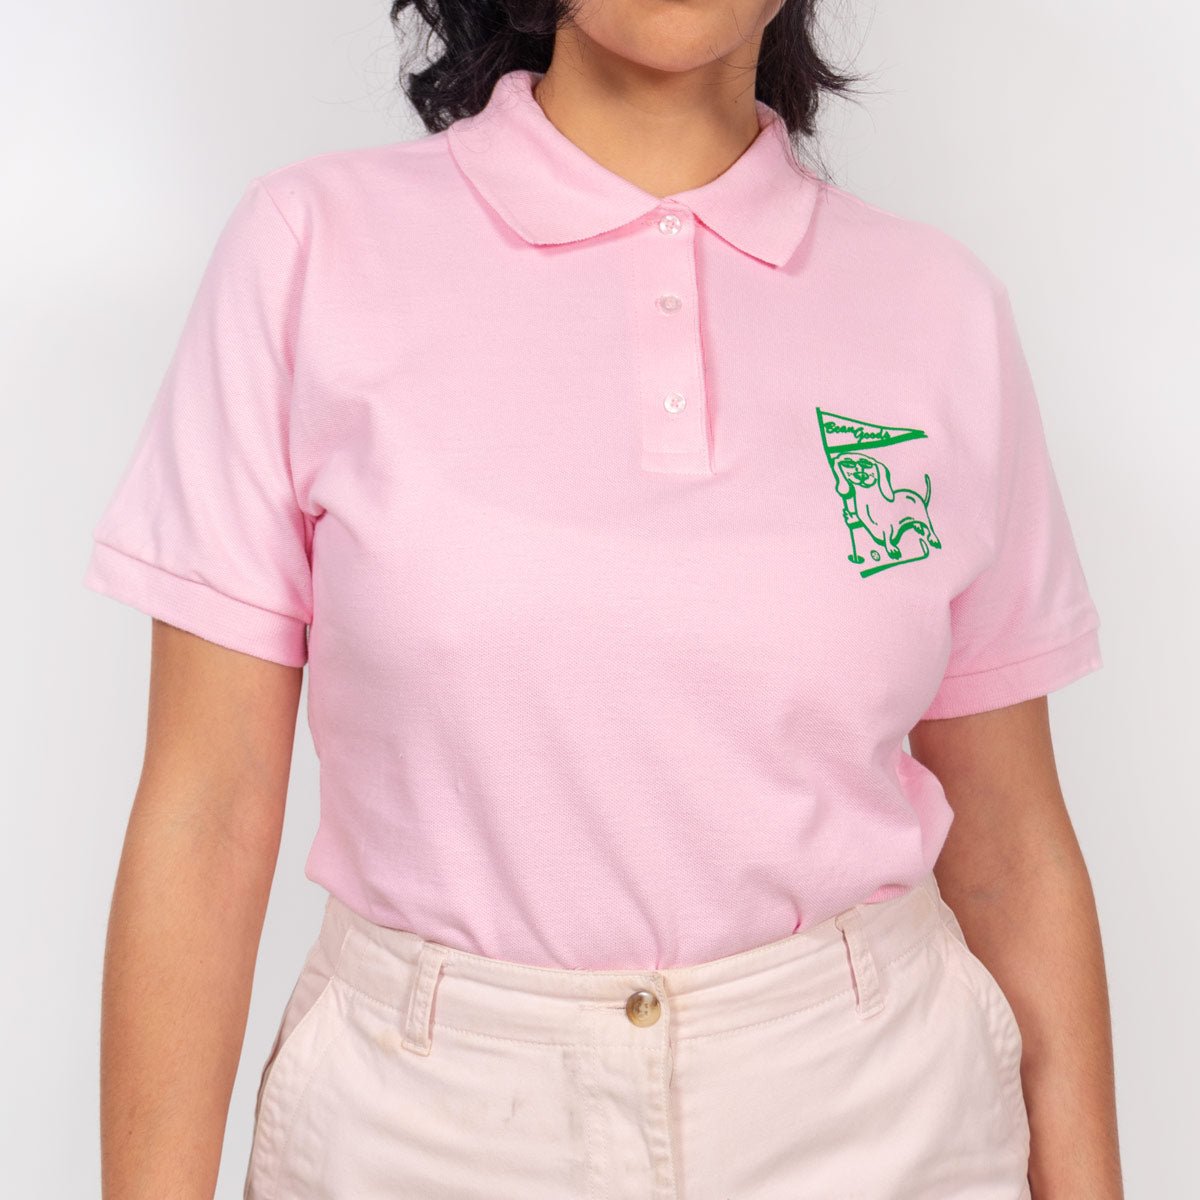 swingin' wieners golf club womens polo | pink - bean goods